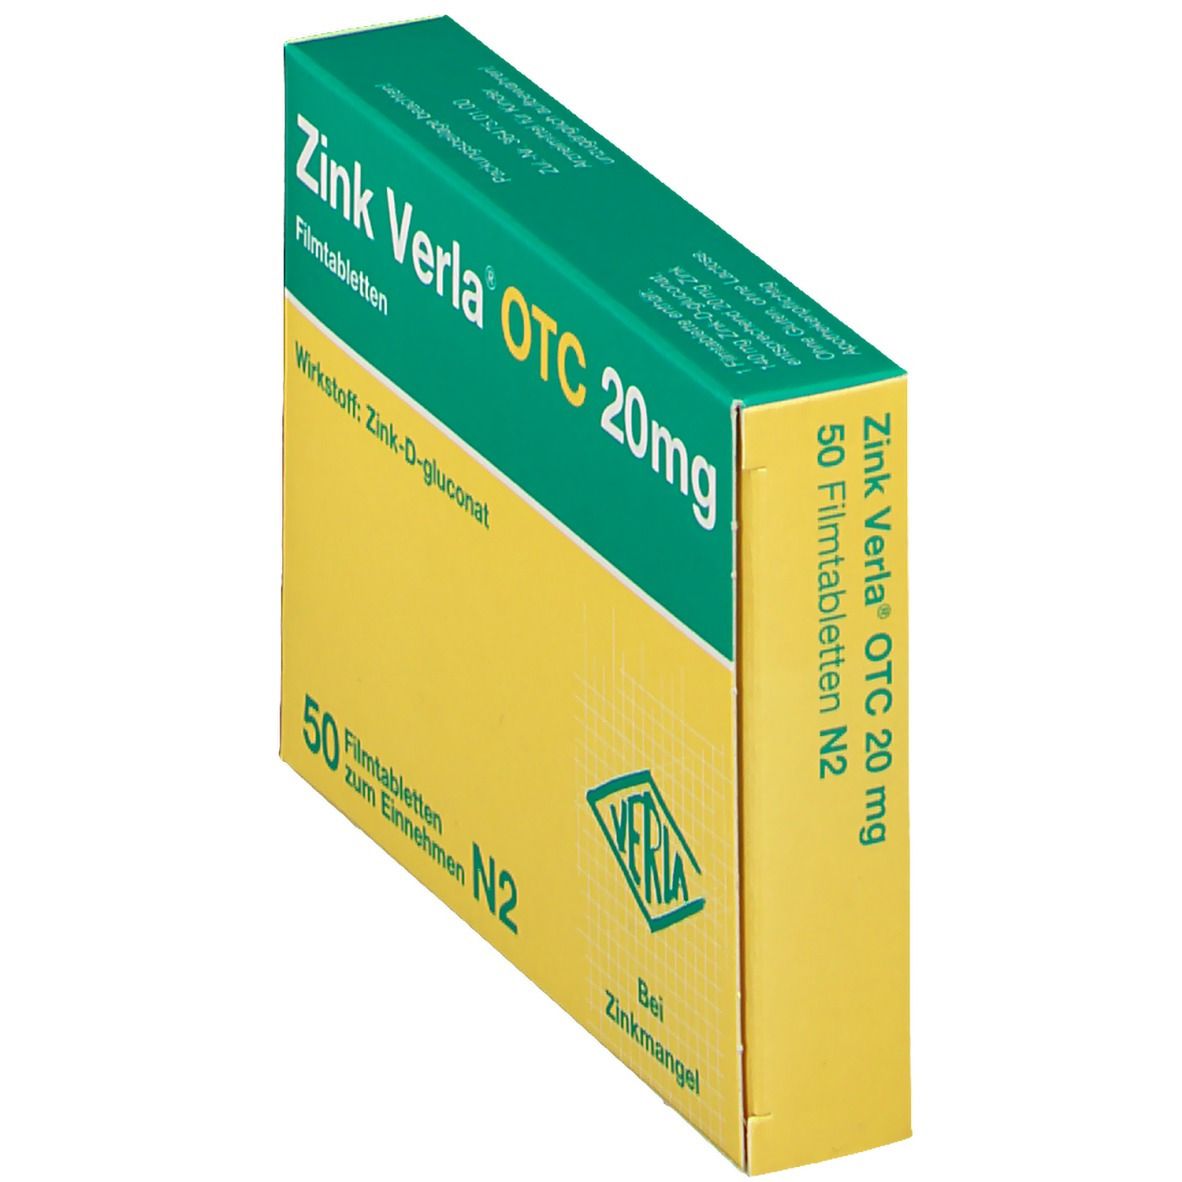 Zink Verla OTC 20 mg Filmtabletten